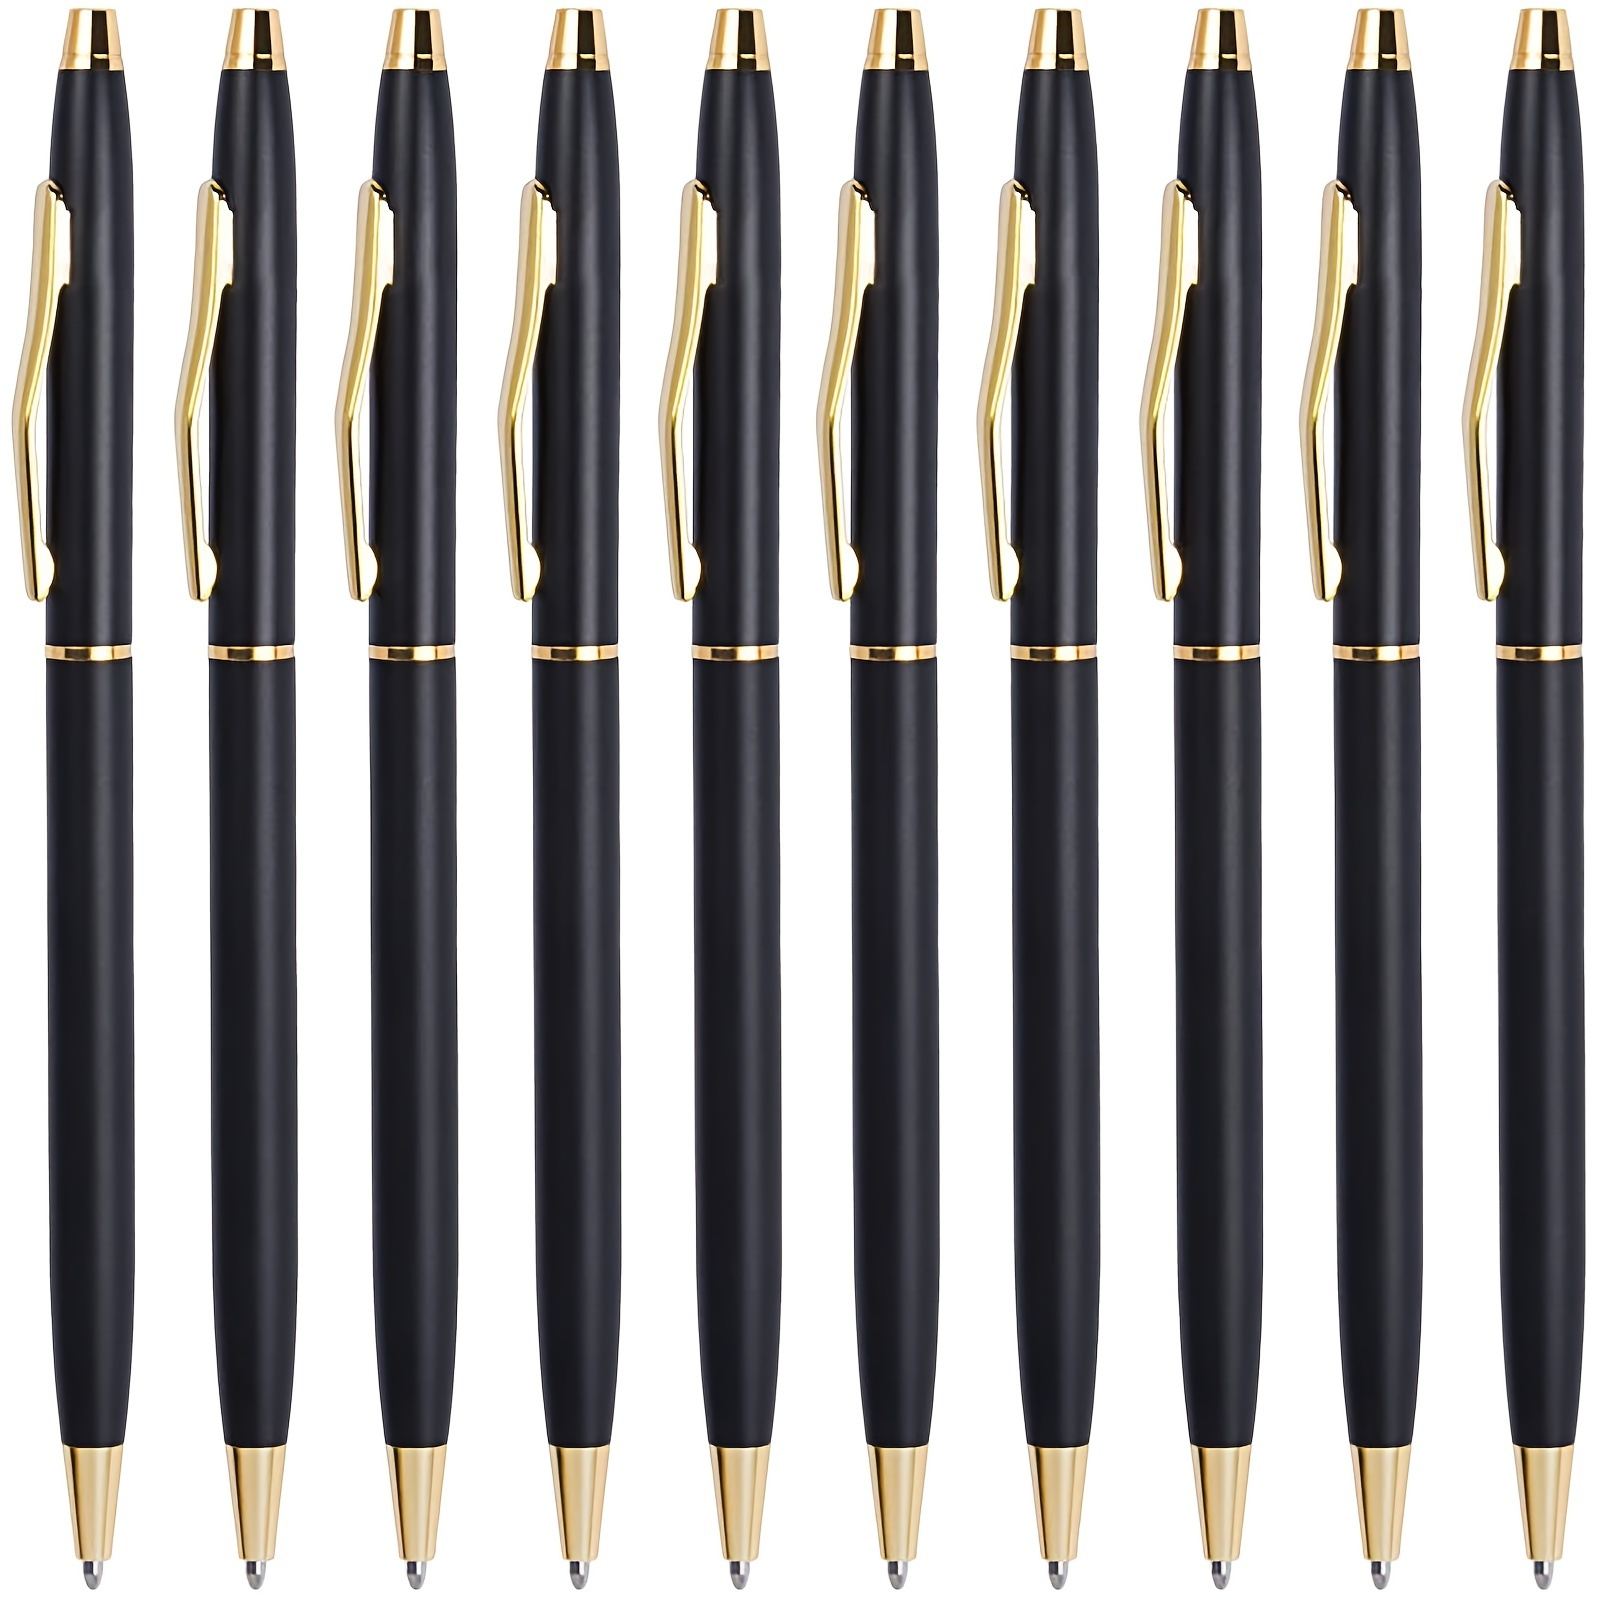 

10pcs Black & Gold Ballpoint Pens - Smooth Writing, 1.0mm Medium Point - Perfect For Men, Women, Office & Business Uniforms!